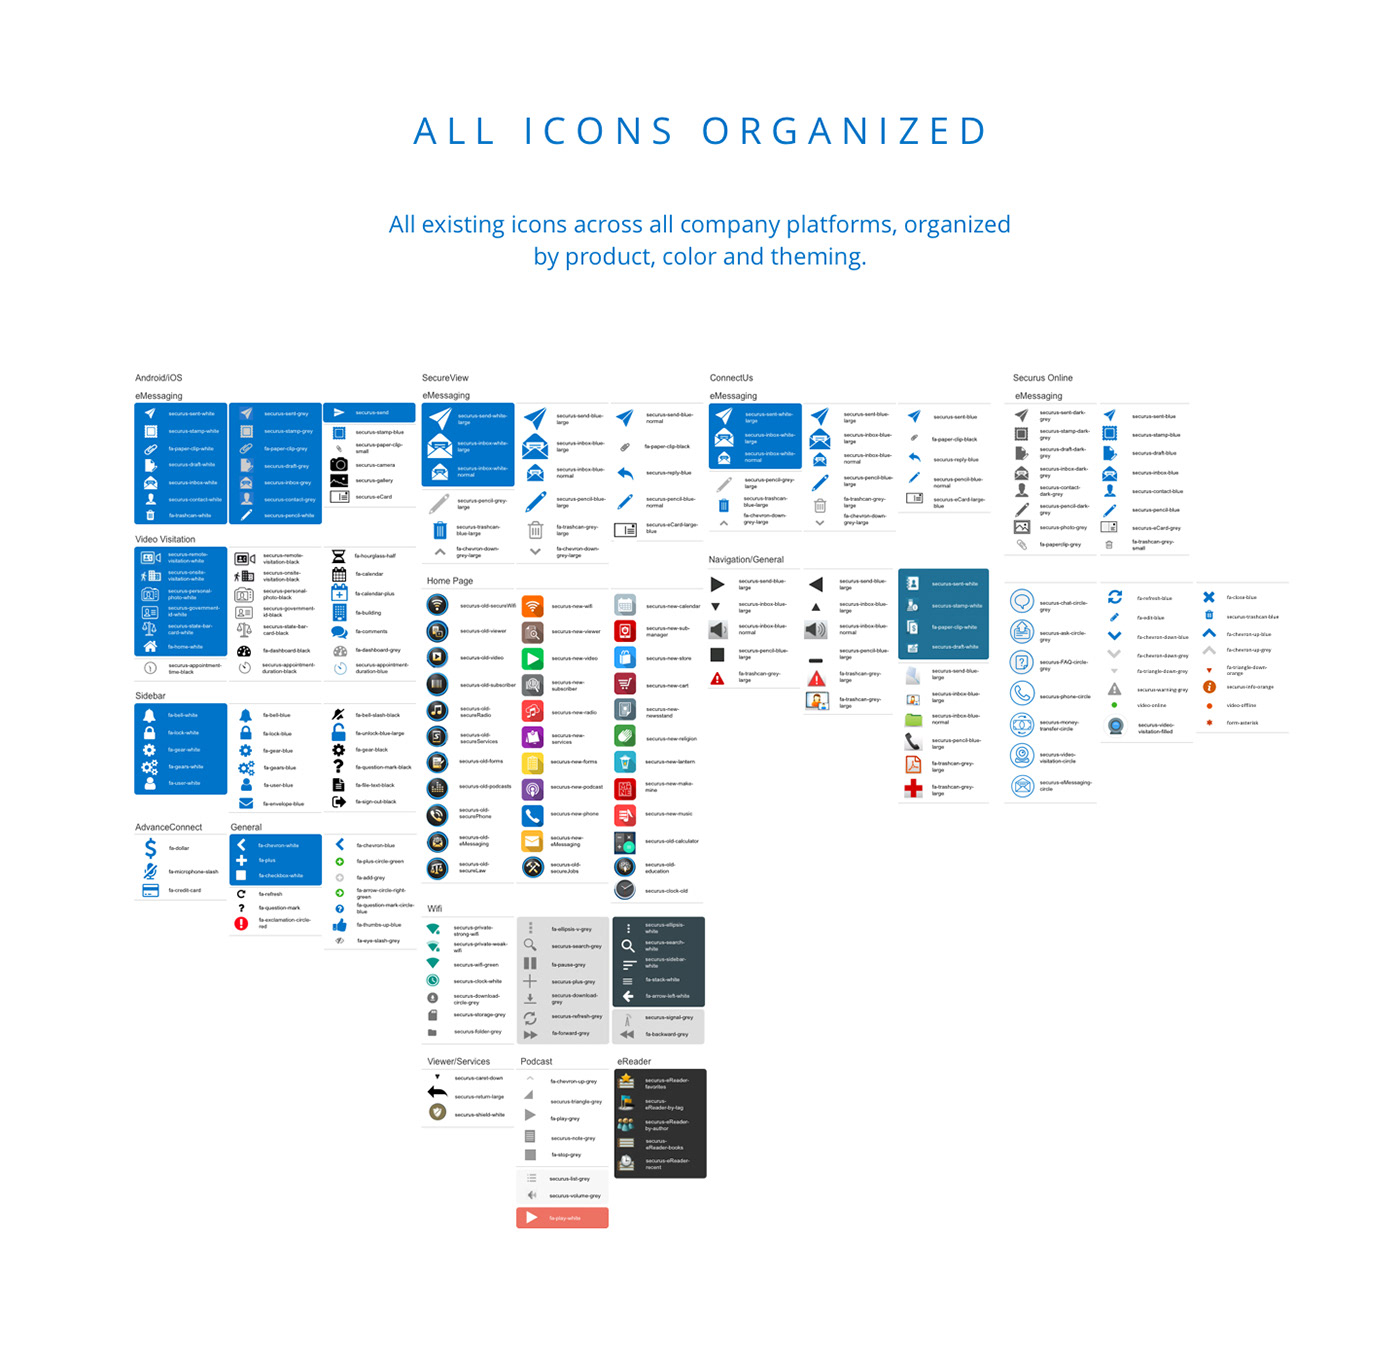 Icon Repository search details request organization customization